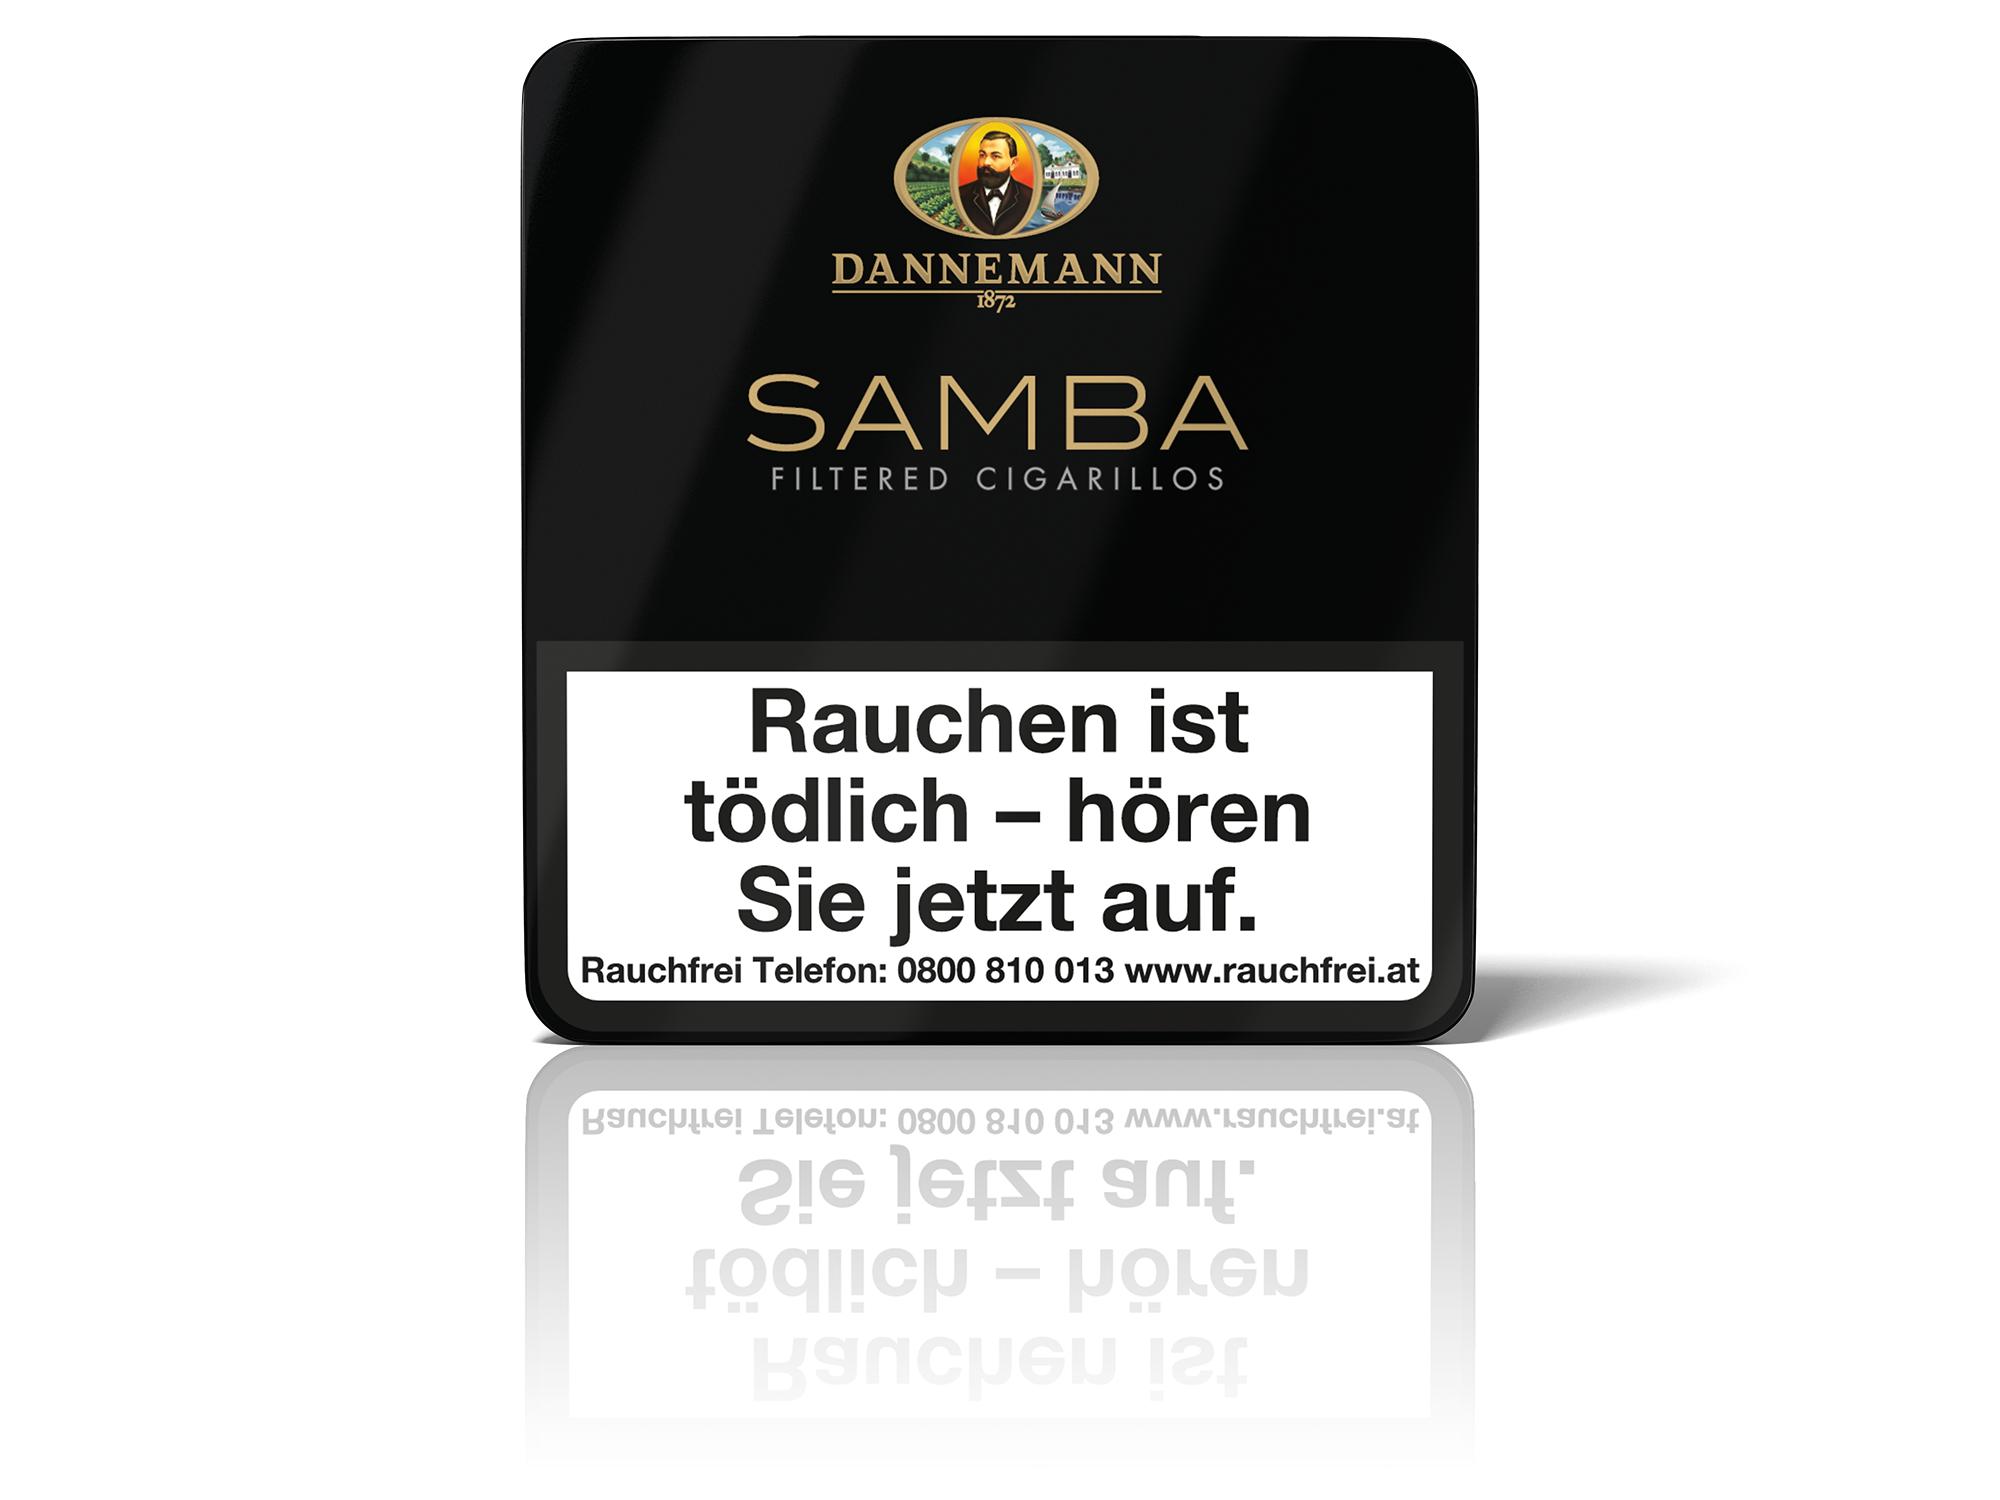 Dannemann Samba Filter 5 x 10 Zigarillos